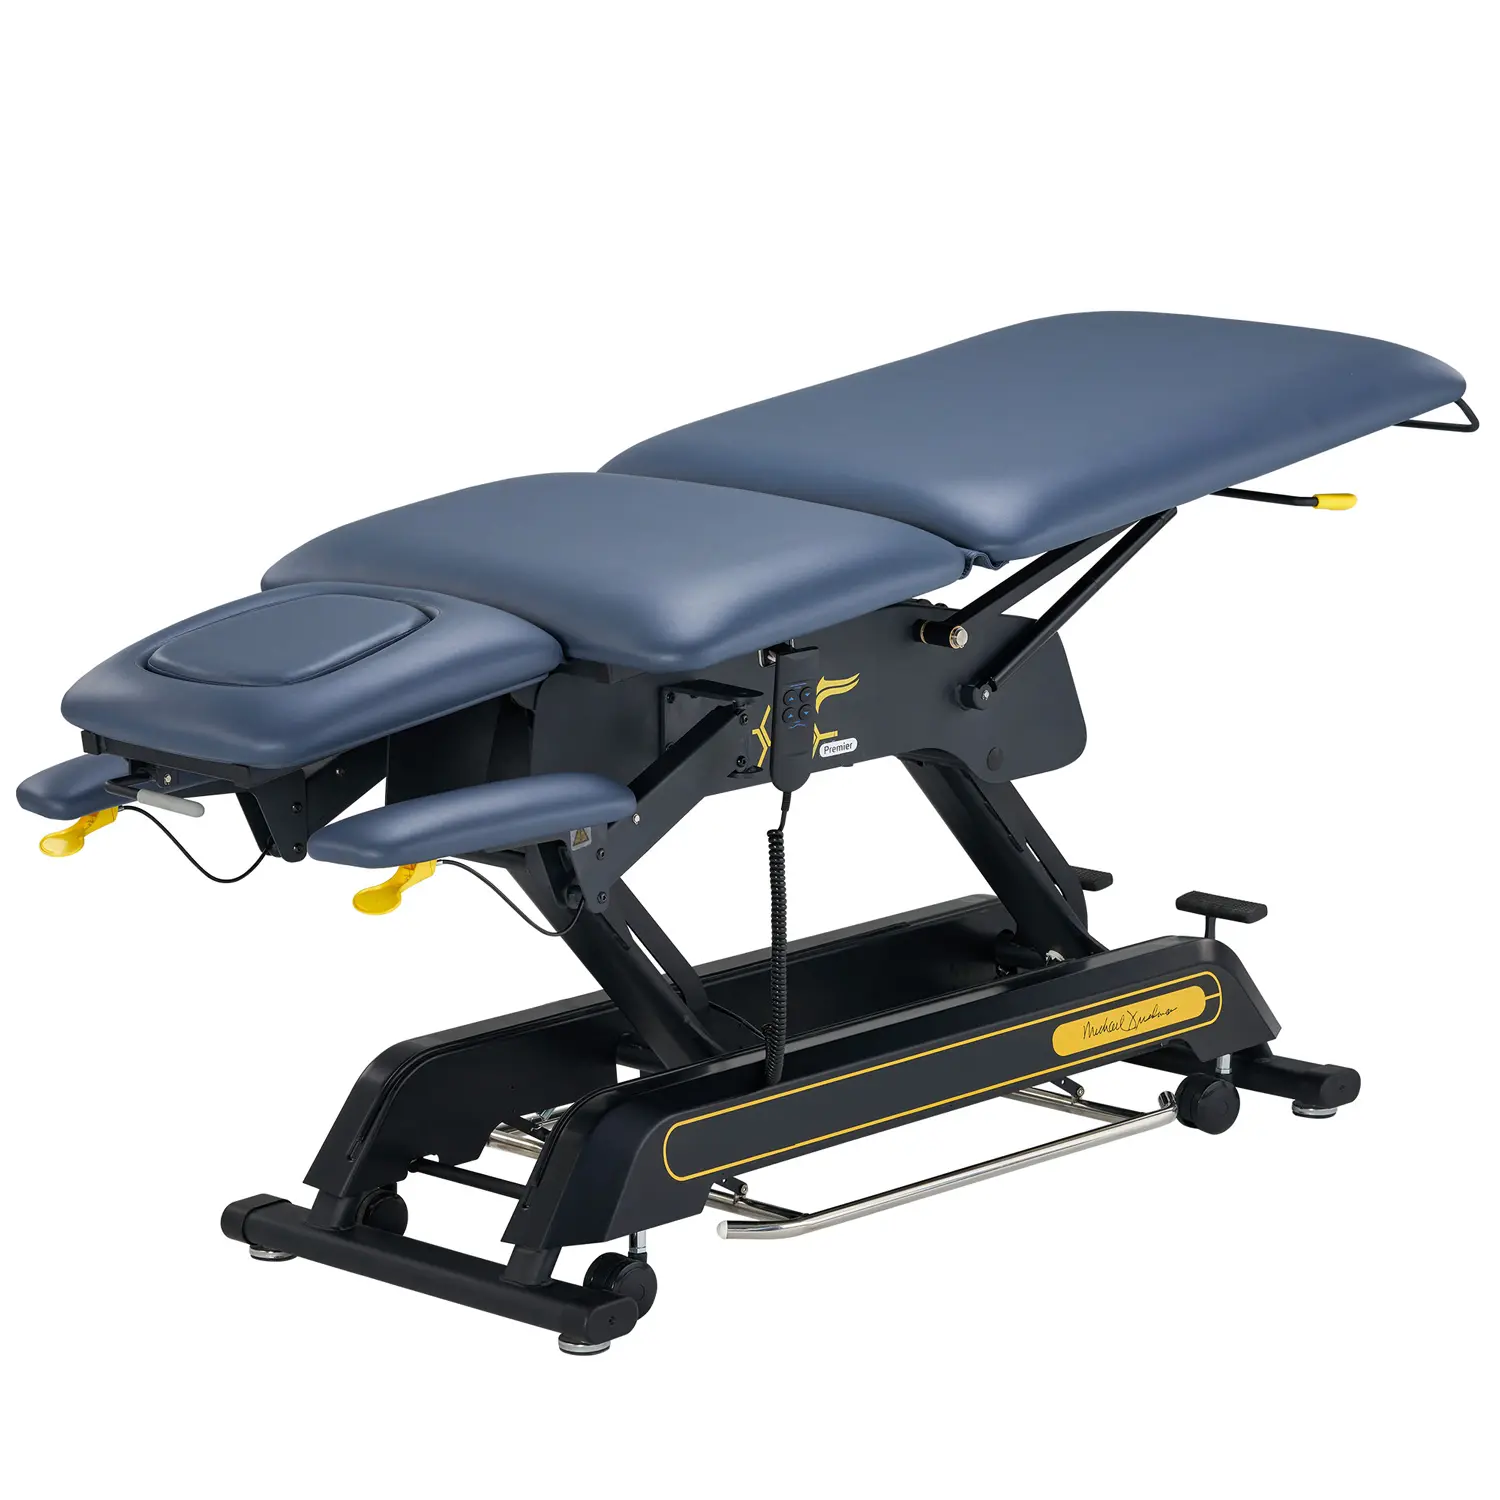 Hemet premier-fábrica infinito barato profissional, tratamento de fisioterapia elétrica mesa de massagem cama